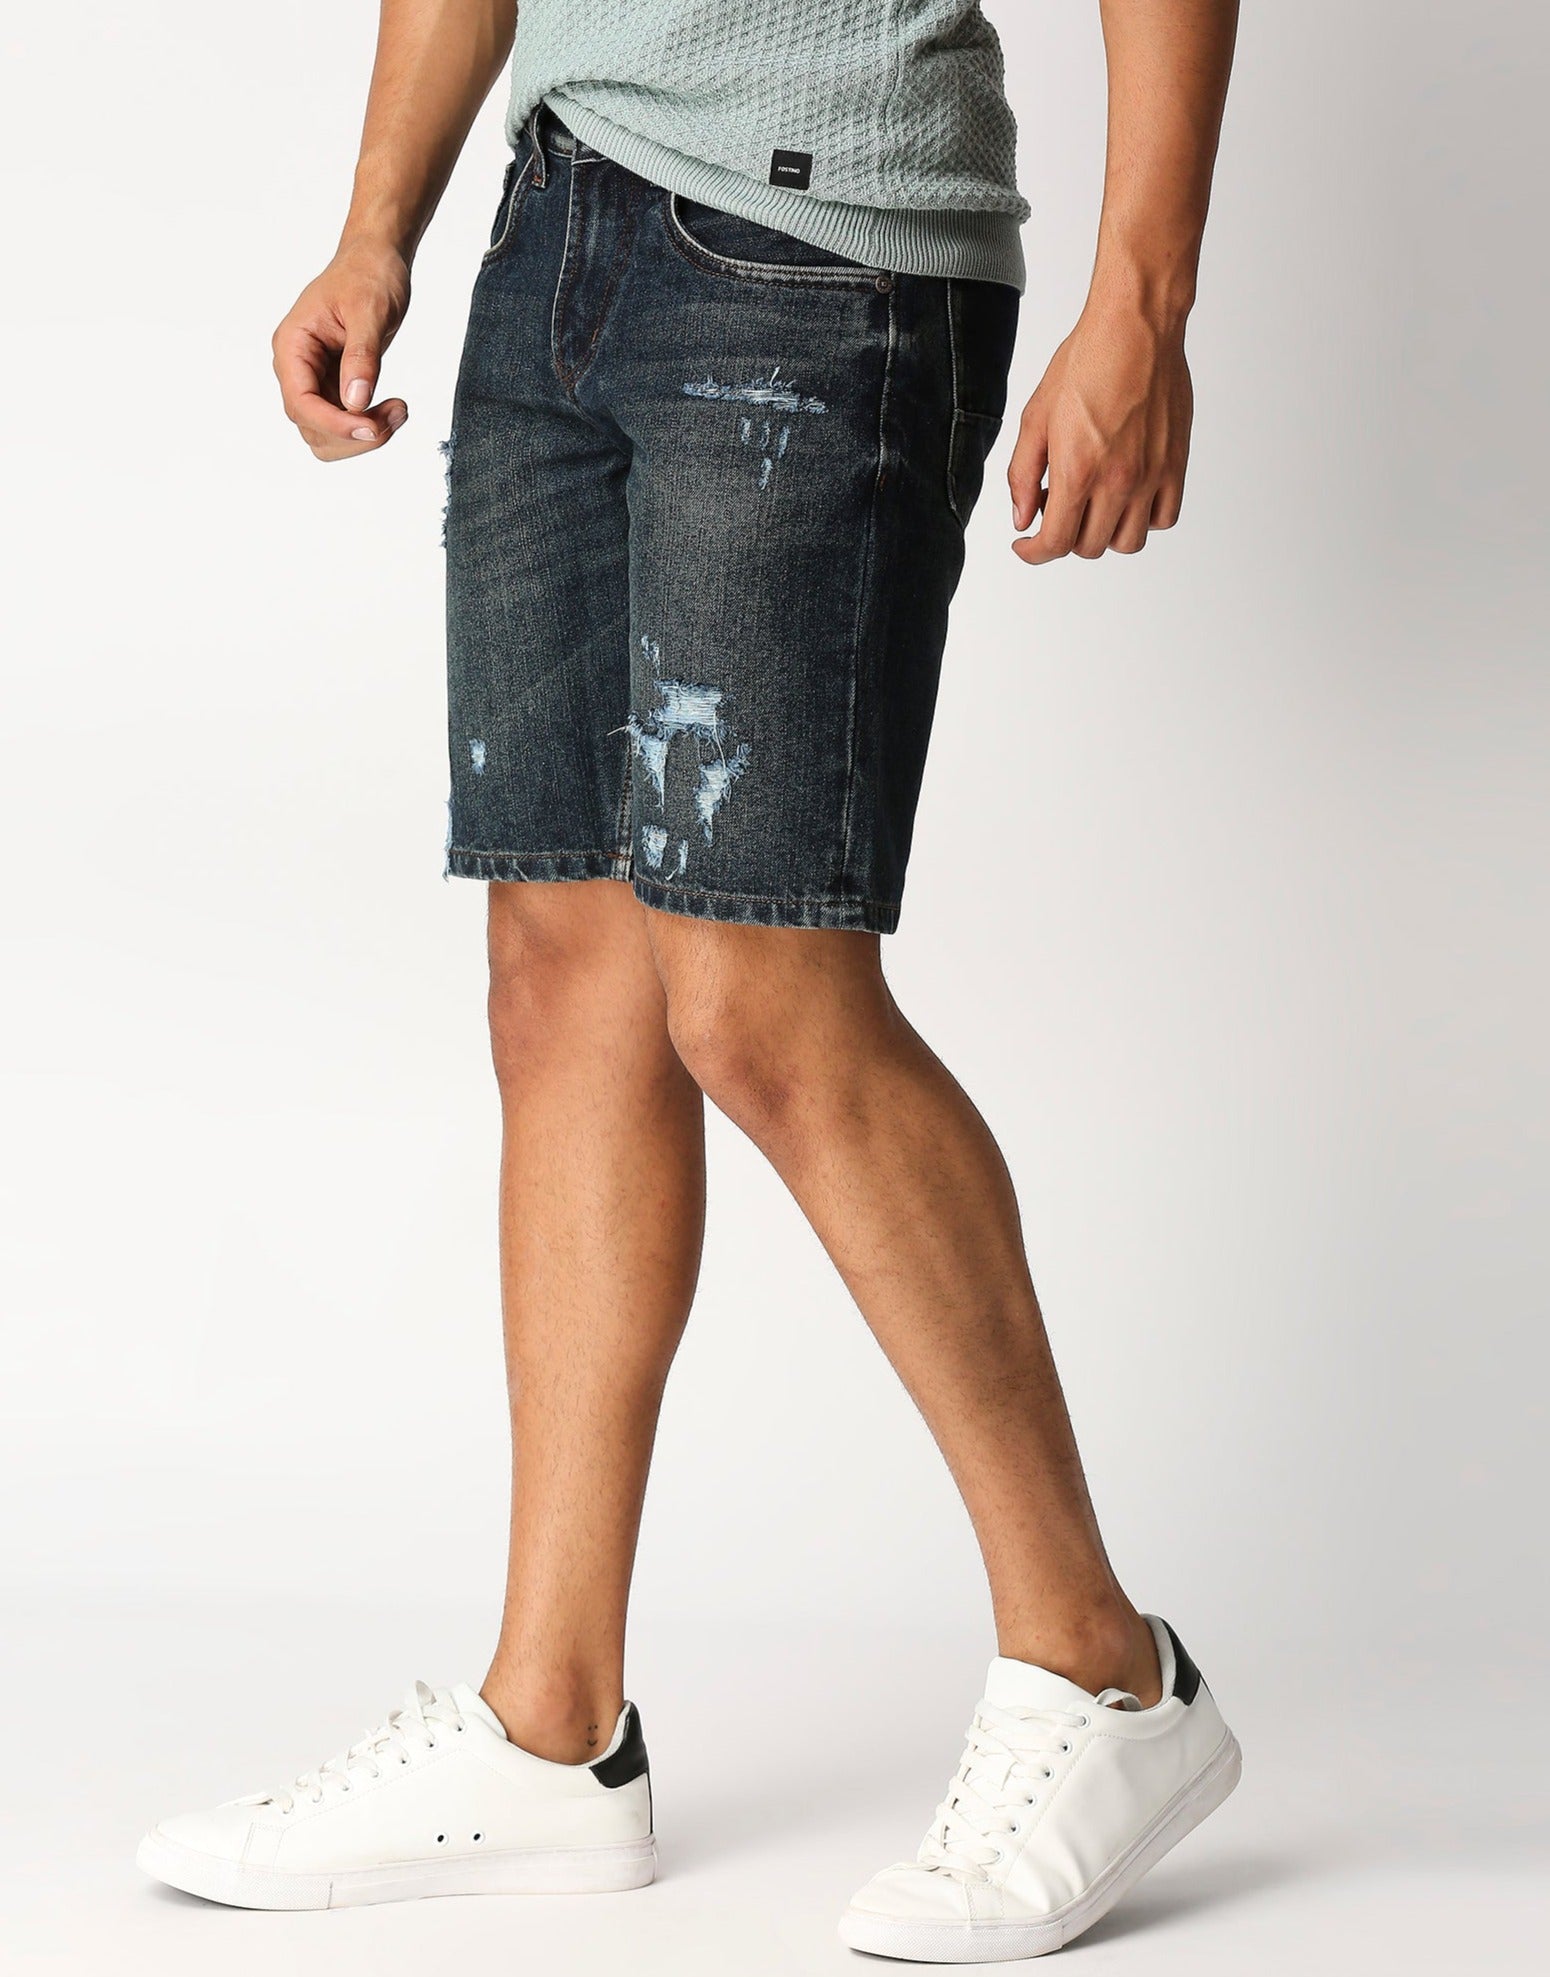 Fostino Vintage Wash Denim dark blue Distress Shorts - Fostino Shorts